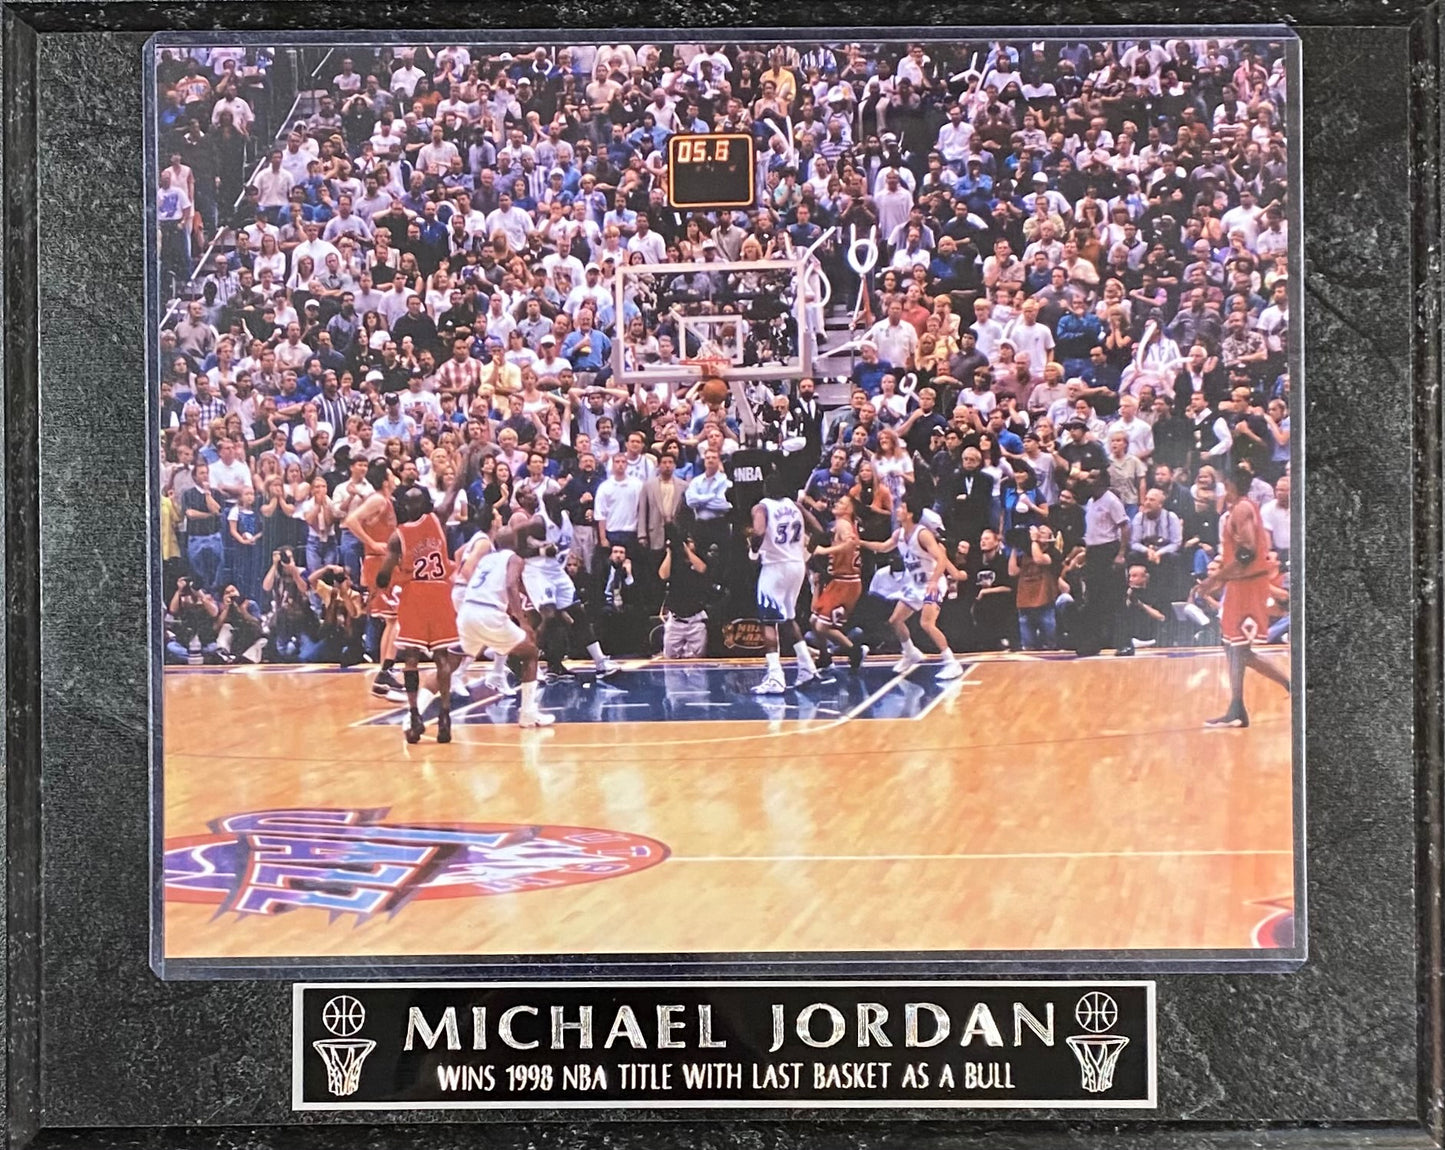 Michael Jordan "Wins 1998 NBA Title With Last Basket As A Bulll" Chicago Bulls Wall Plaque